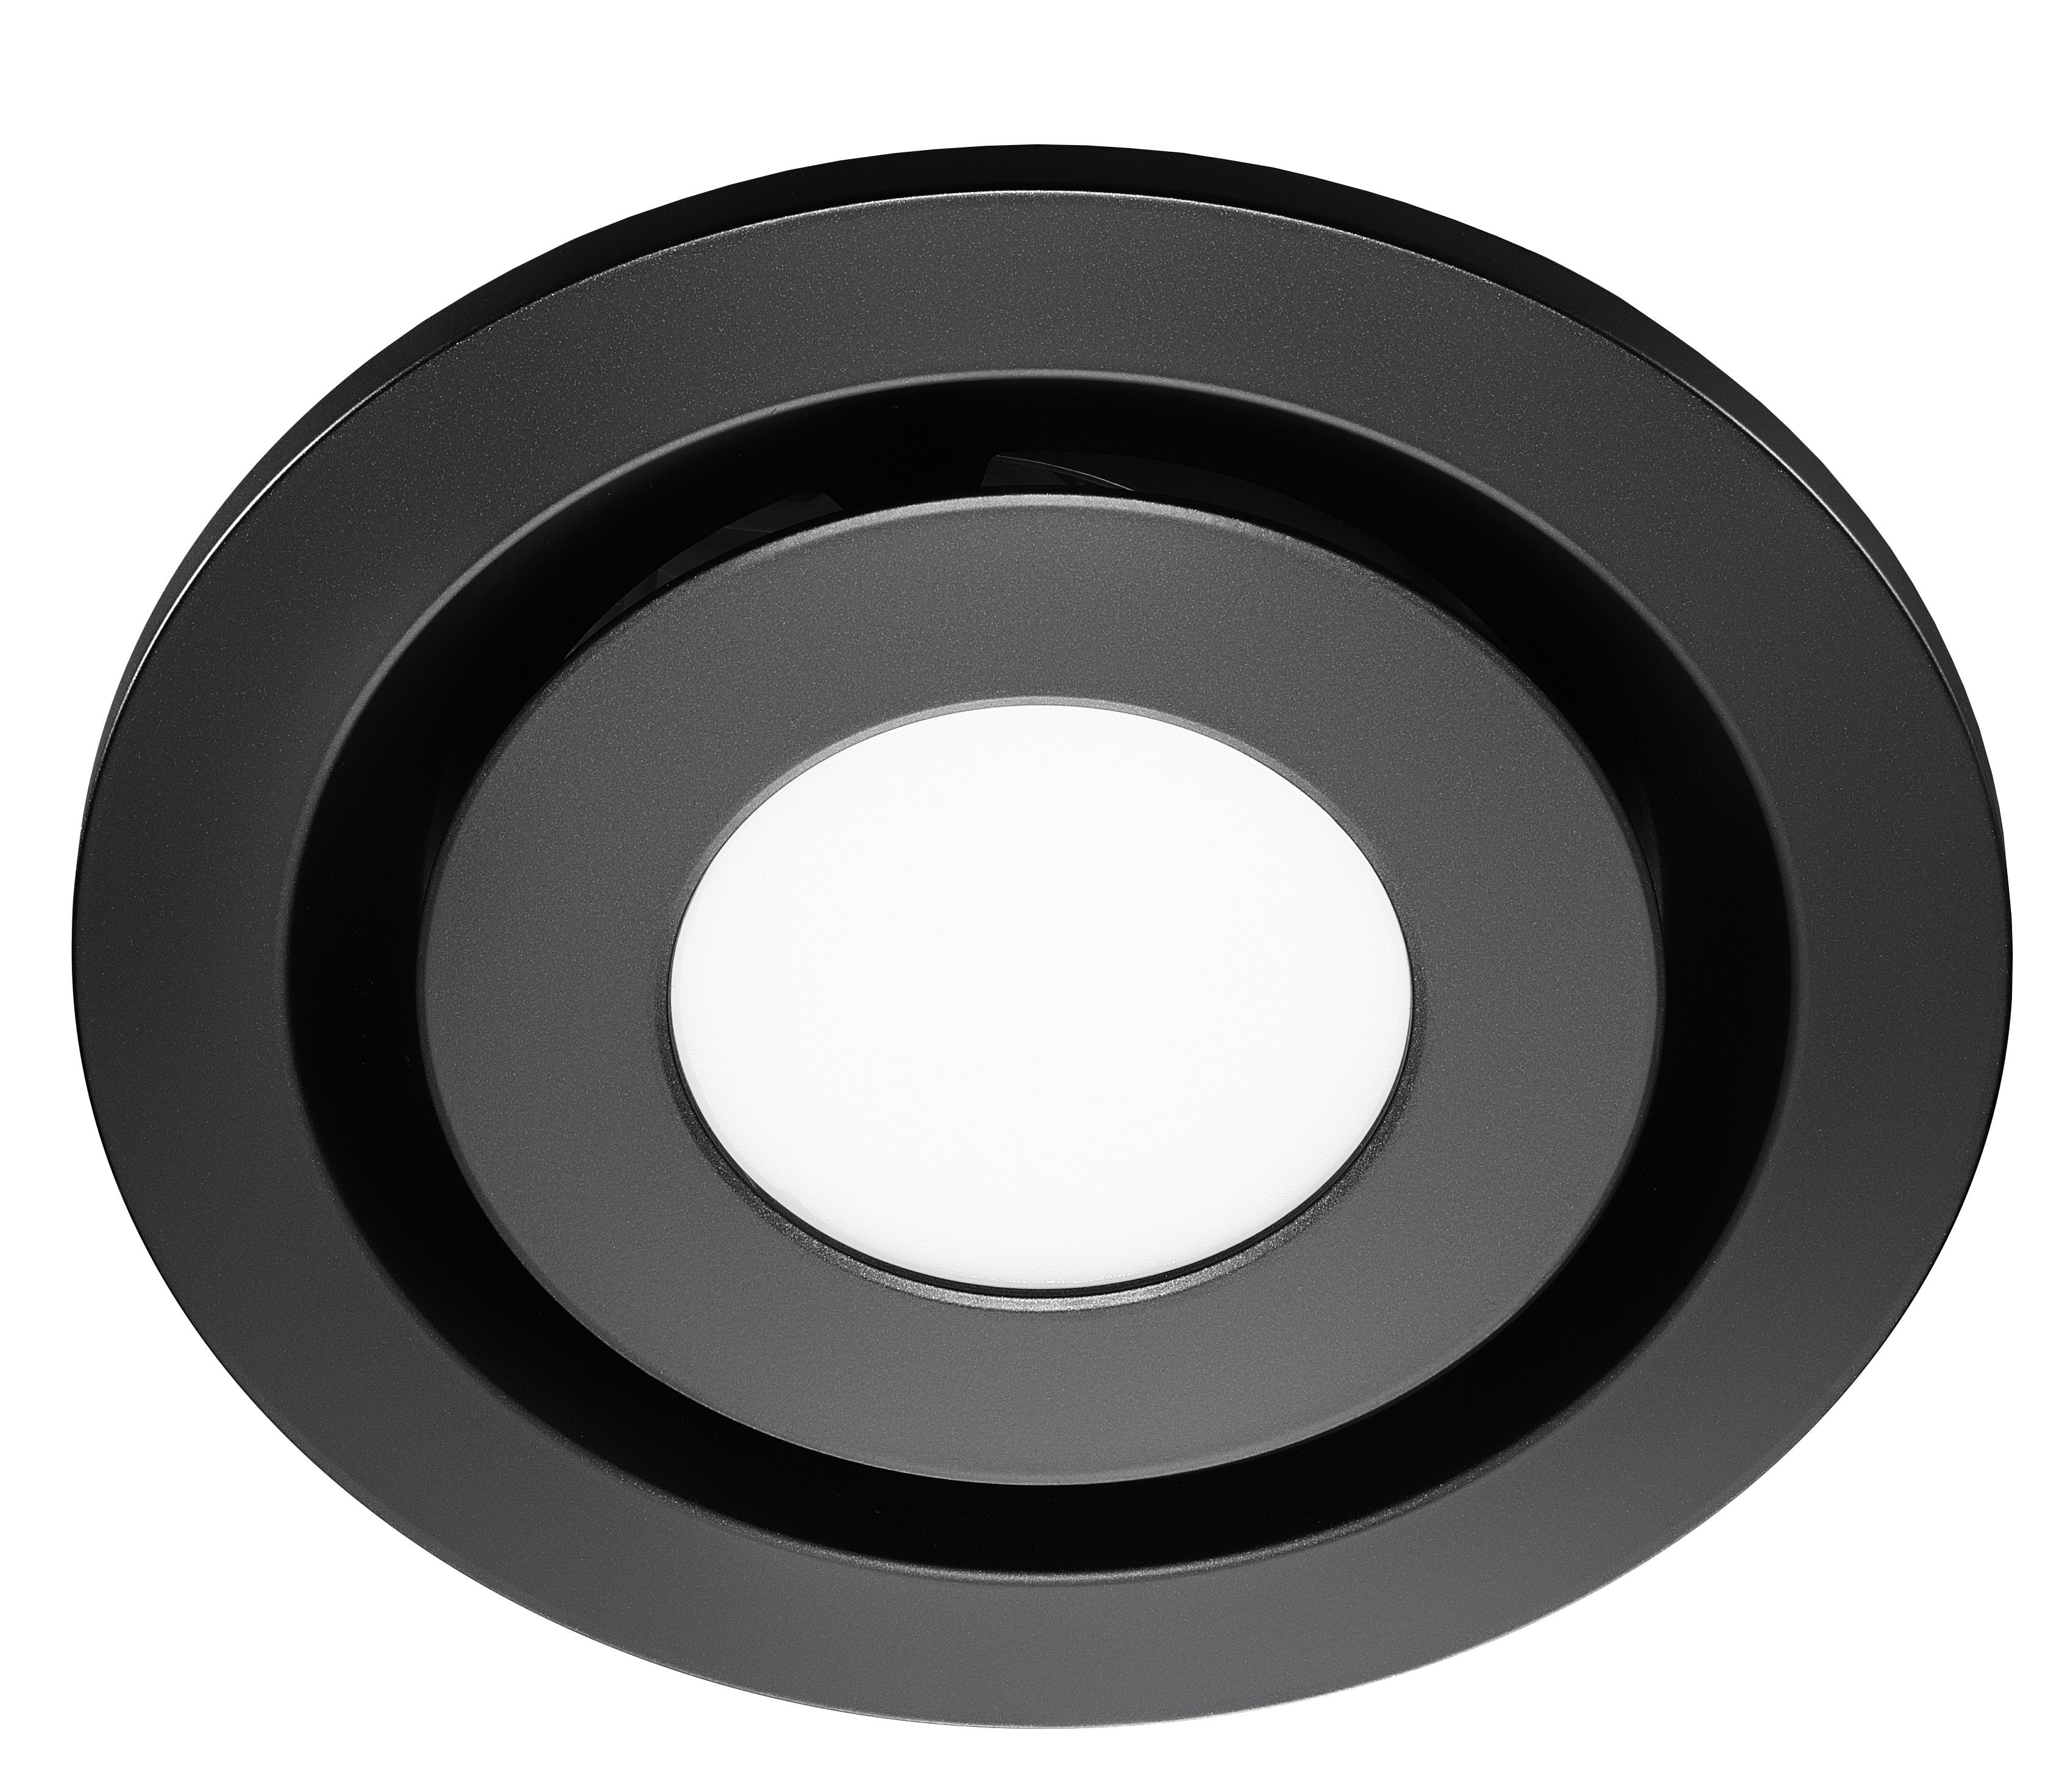 Manrose Contour Fascia With Led 200mm Round Black